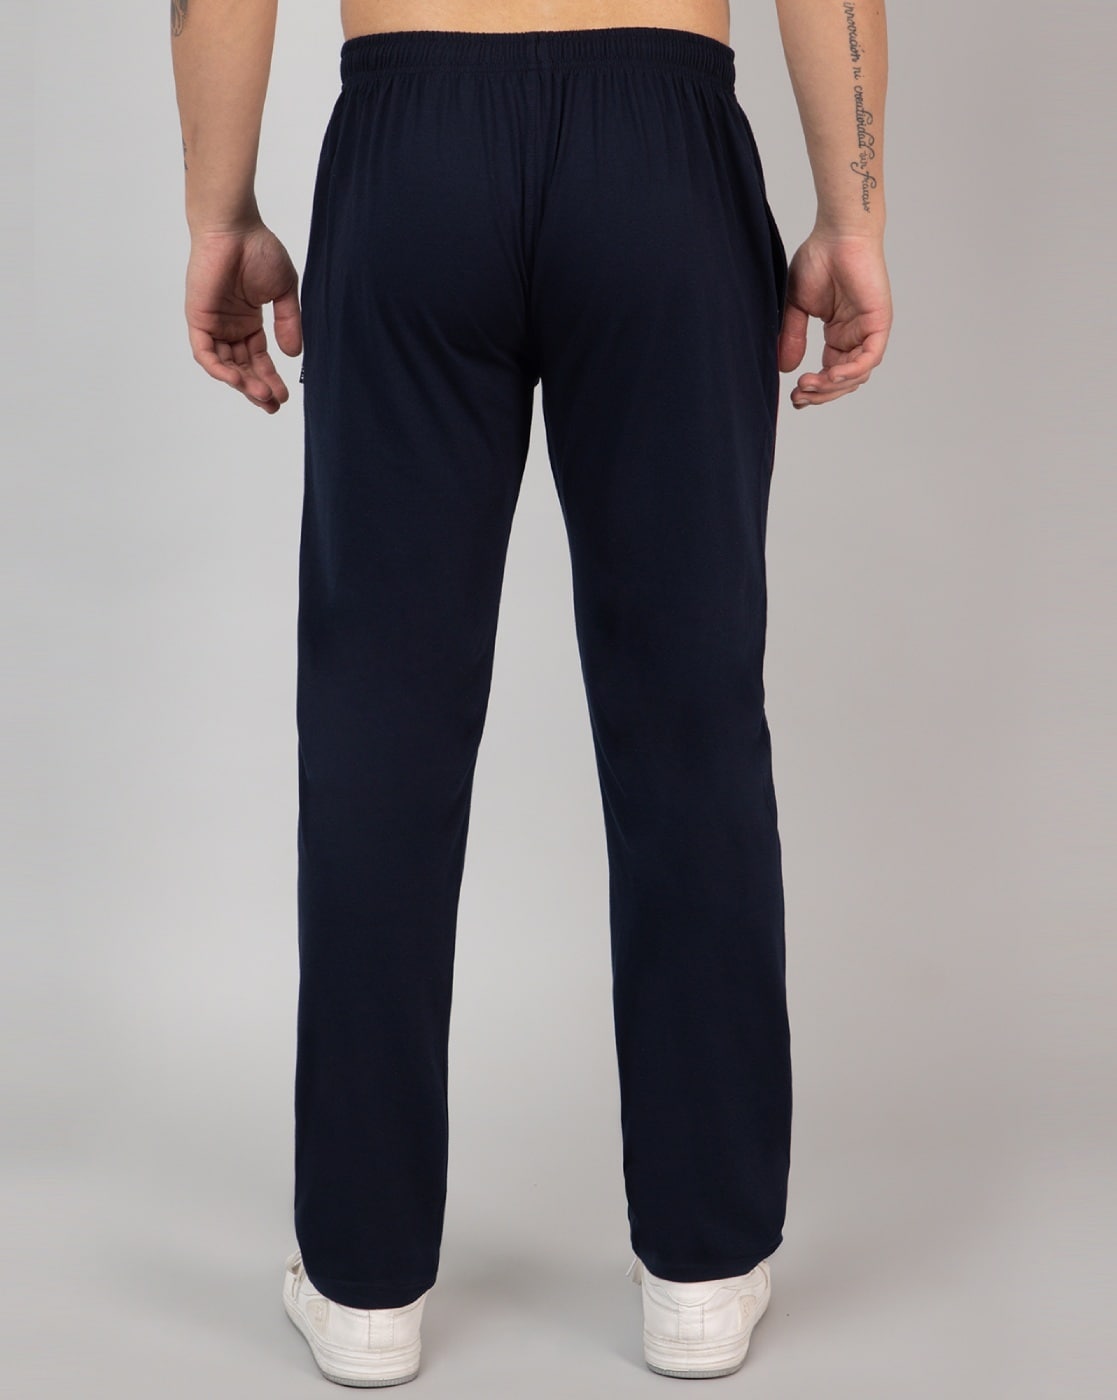 Buy Navy Blue Track Pants for Men by ZEFFIT Online